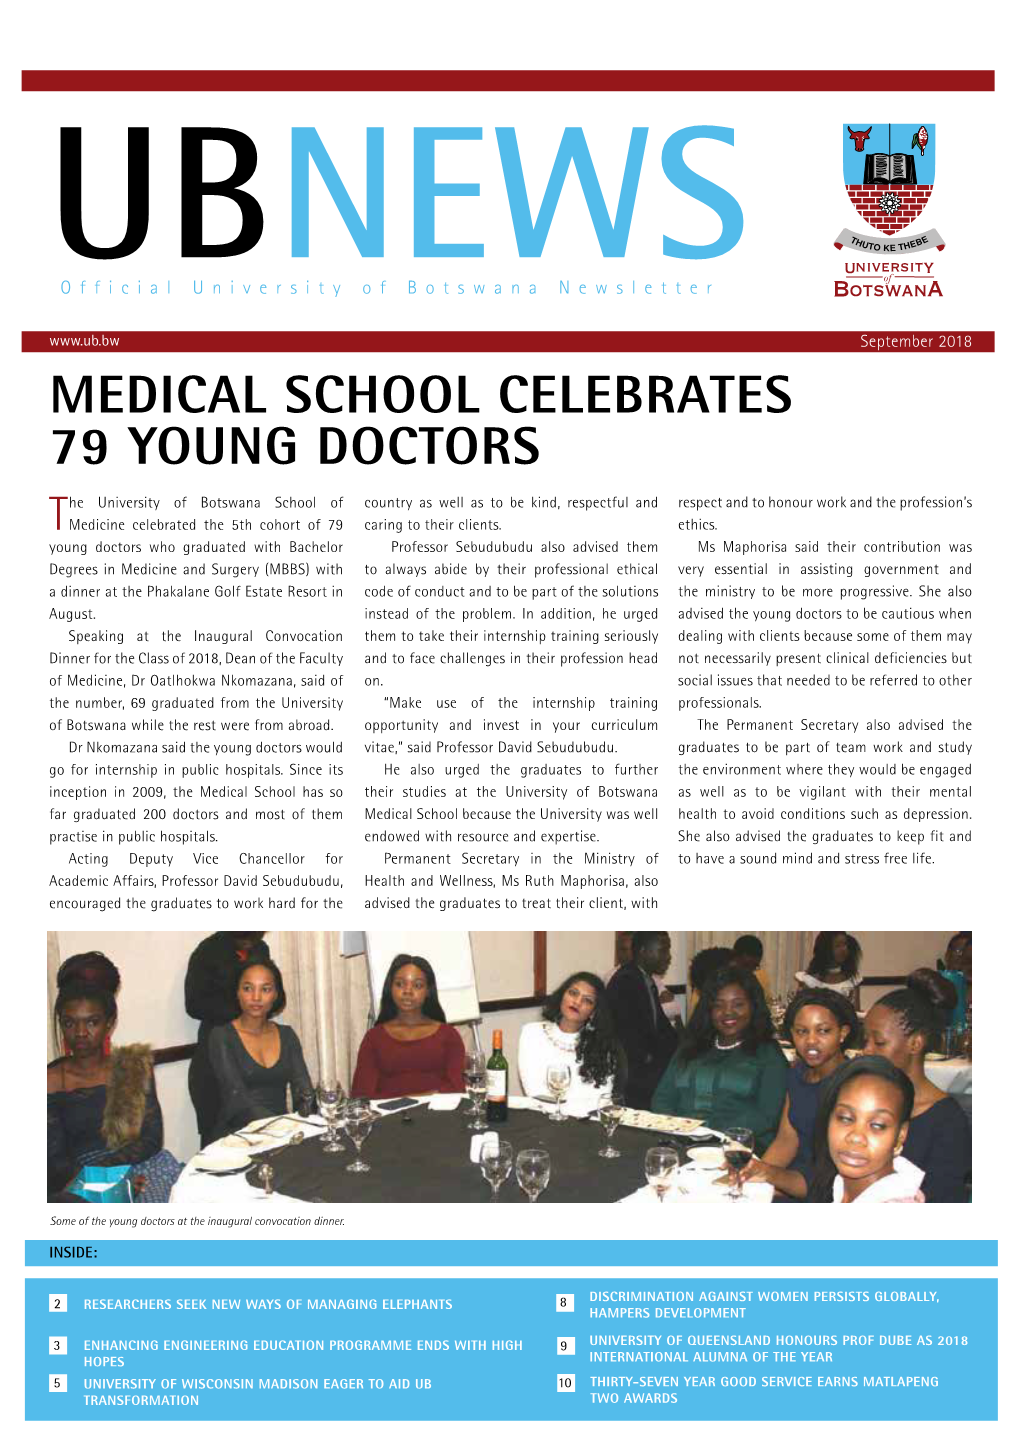 Medical School Celebrates 79 Young Doctors